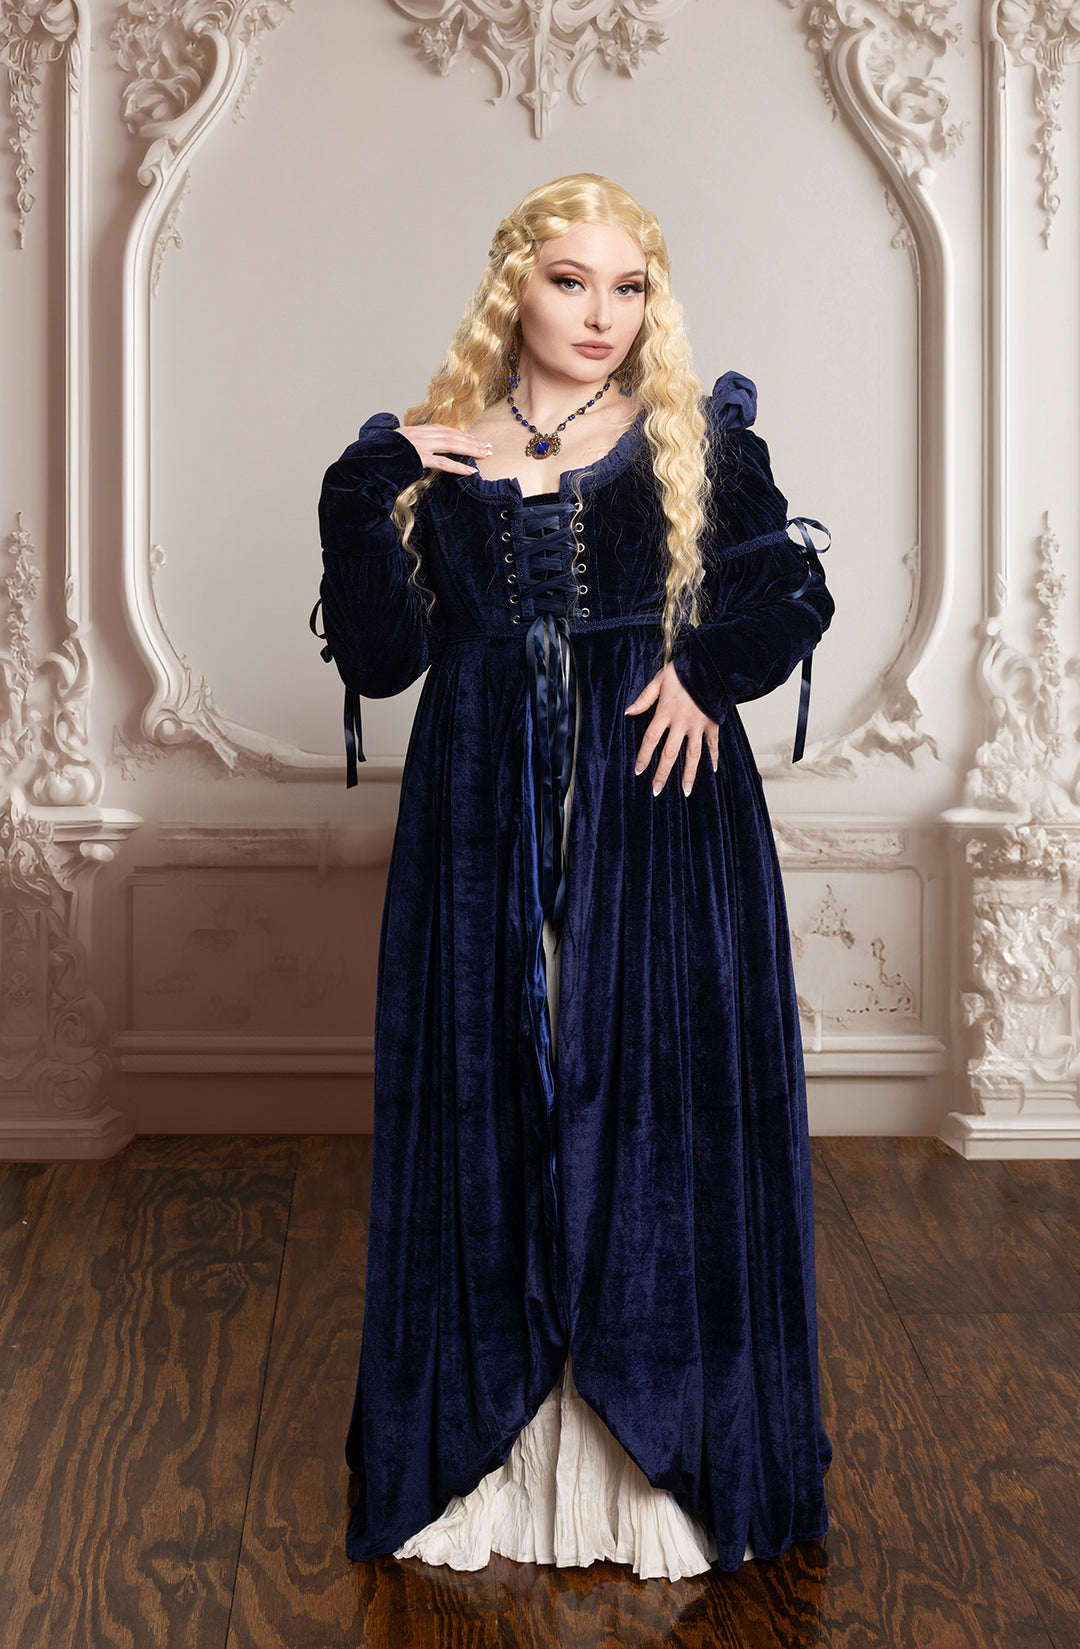 Blue Bridgeton Dress - Regency Empire Waist